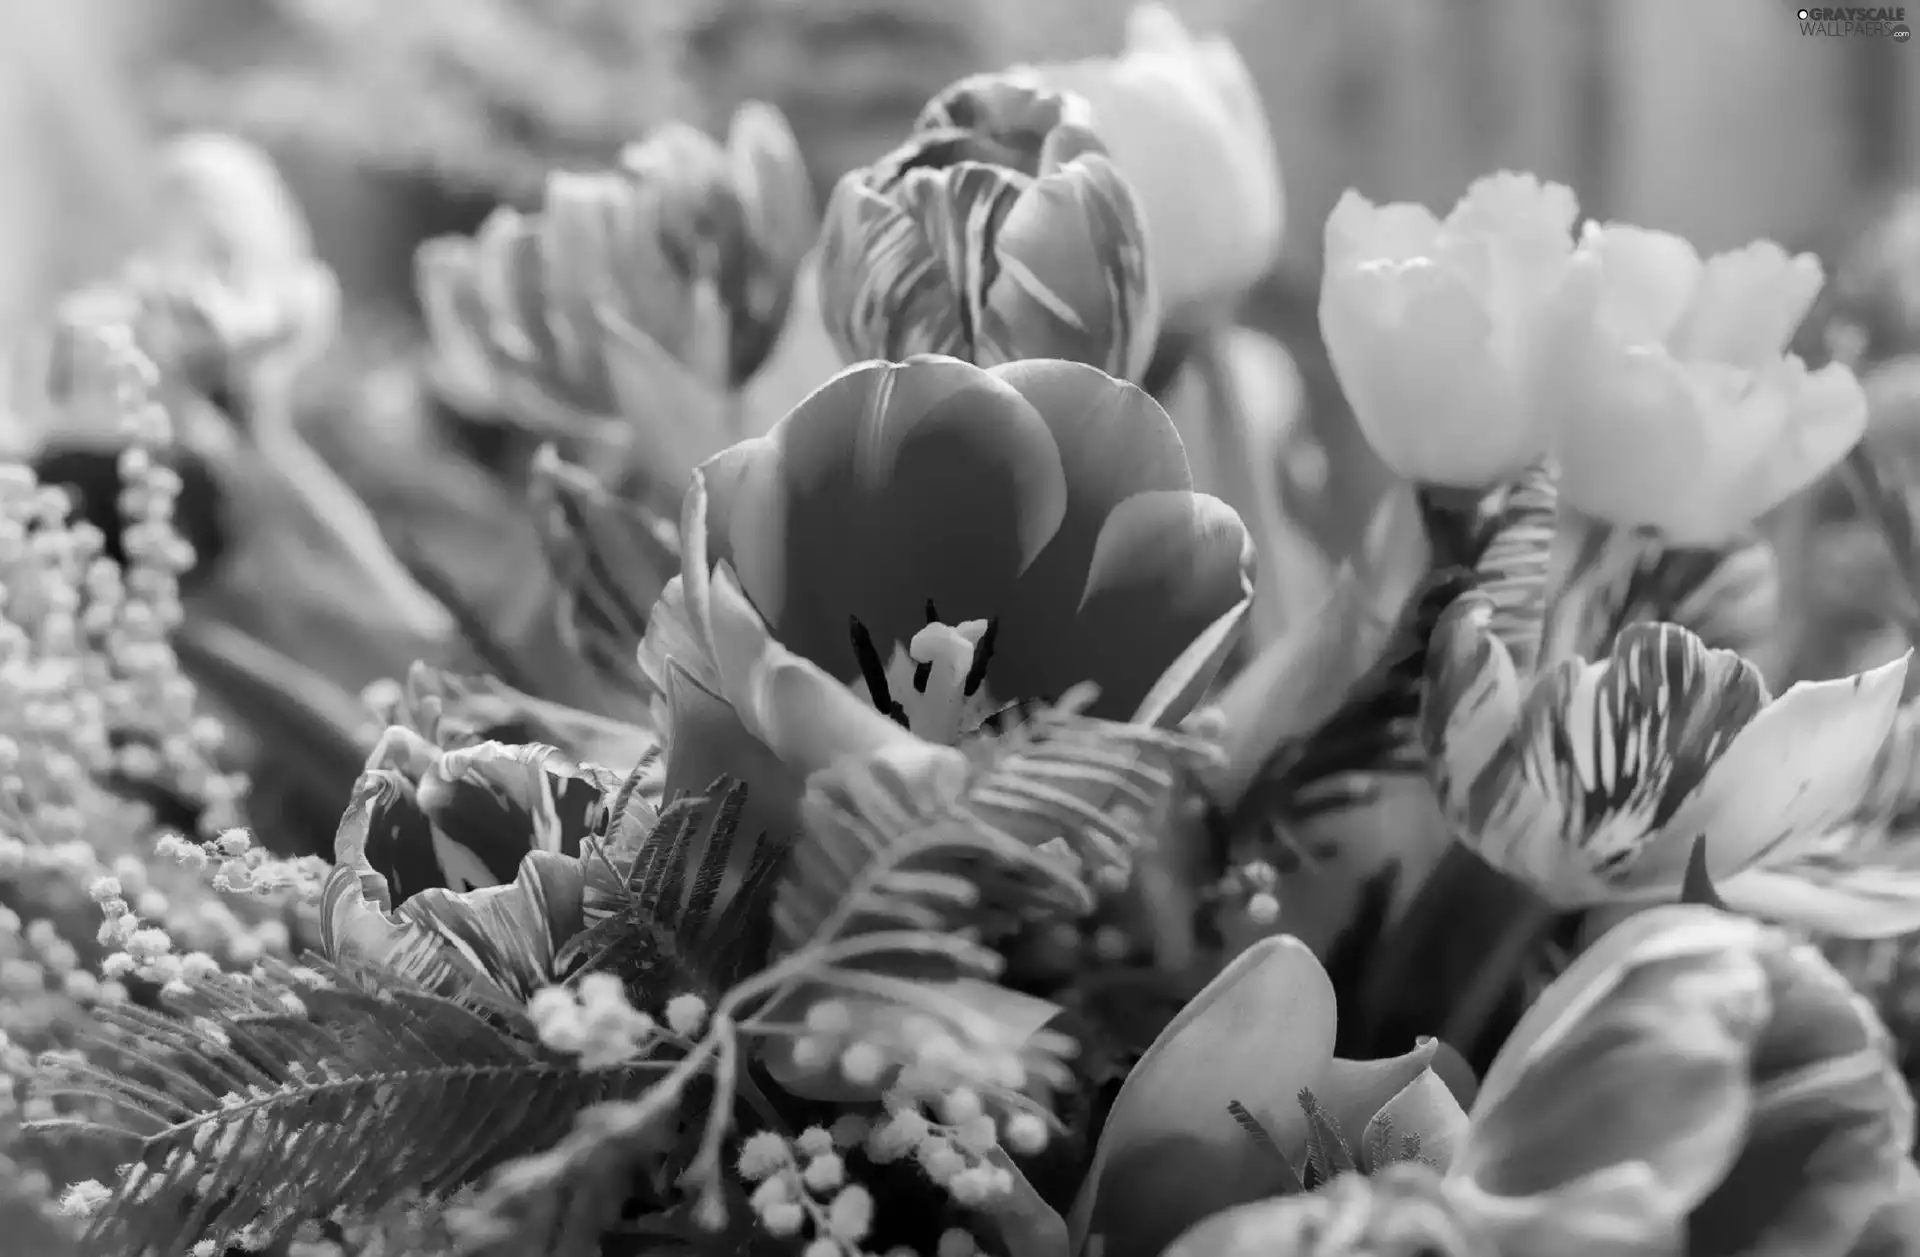 Tulips, bouquet, flowers